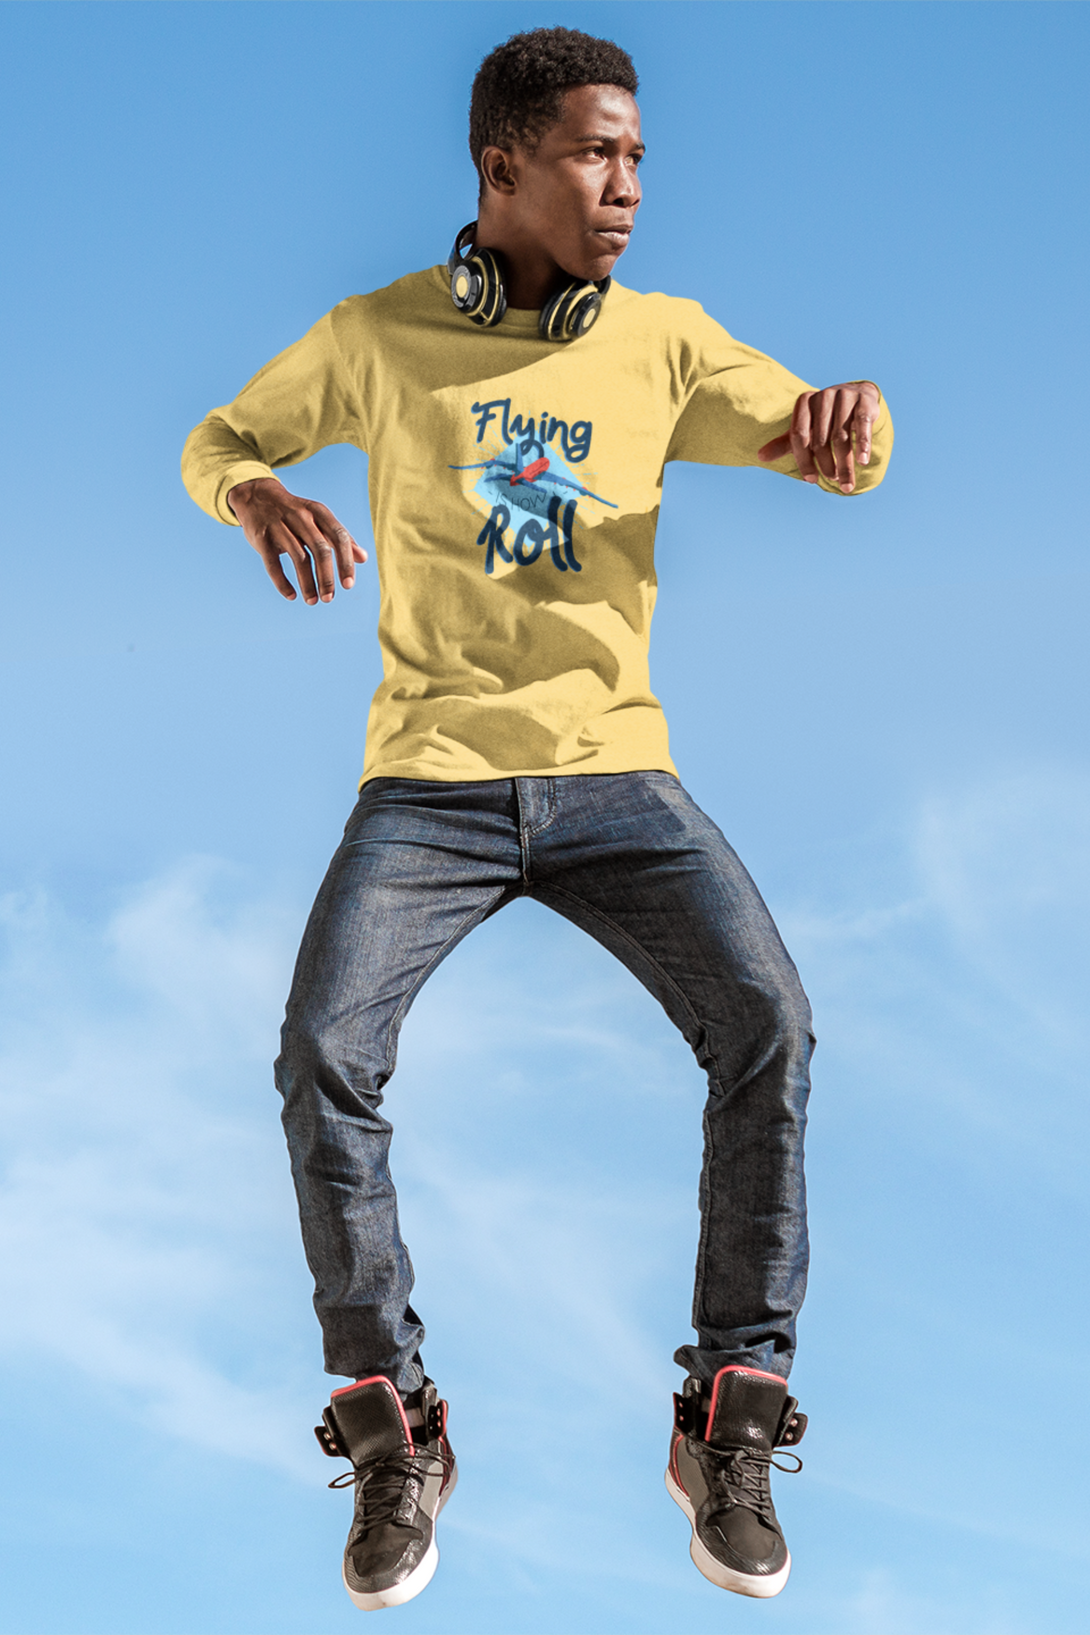 Flying Roll Printed T-Shirt For Men - WowWaves - 5